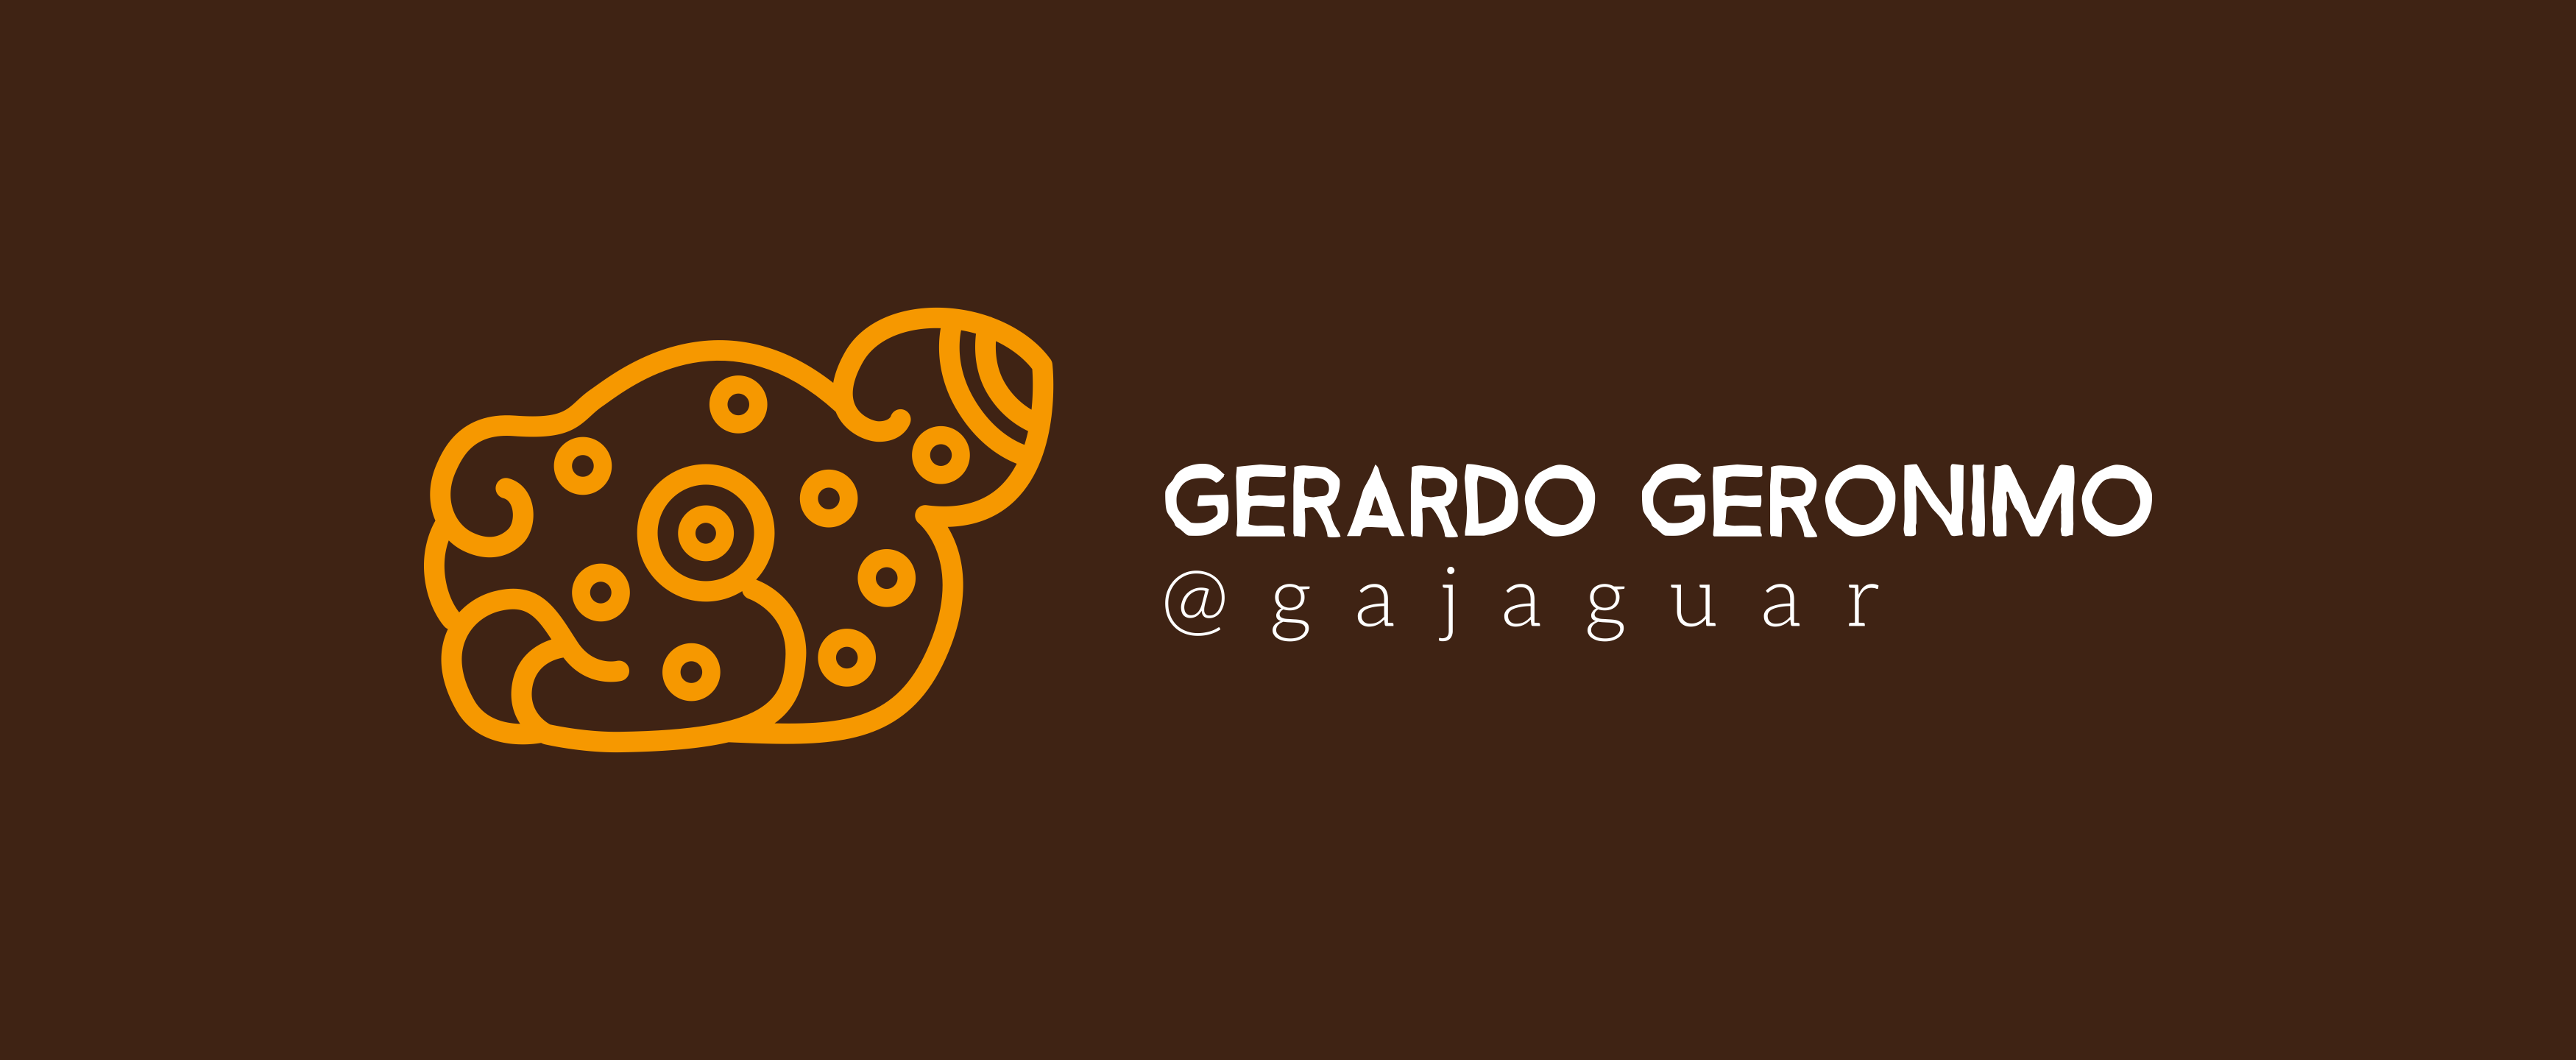 Banner for Gerardo Geronimo - Apprentice Software Developer